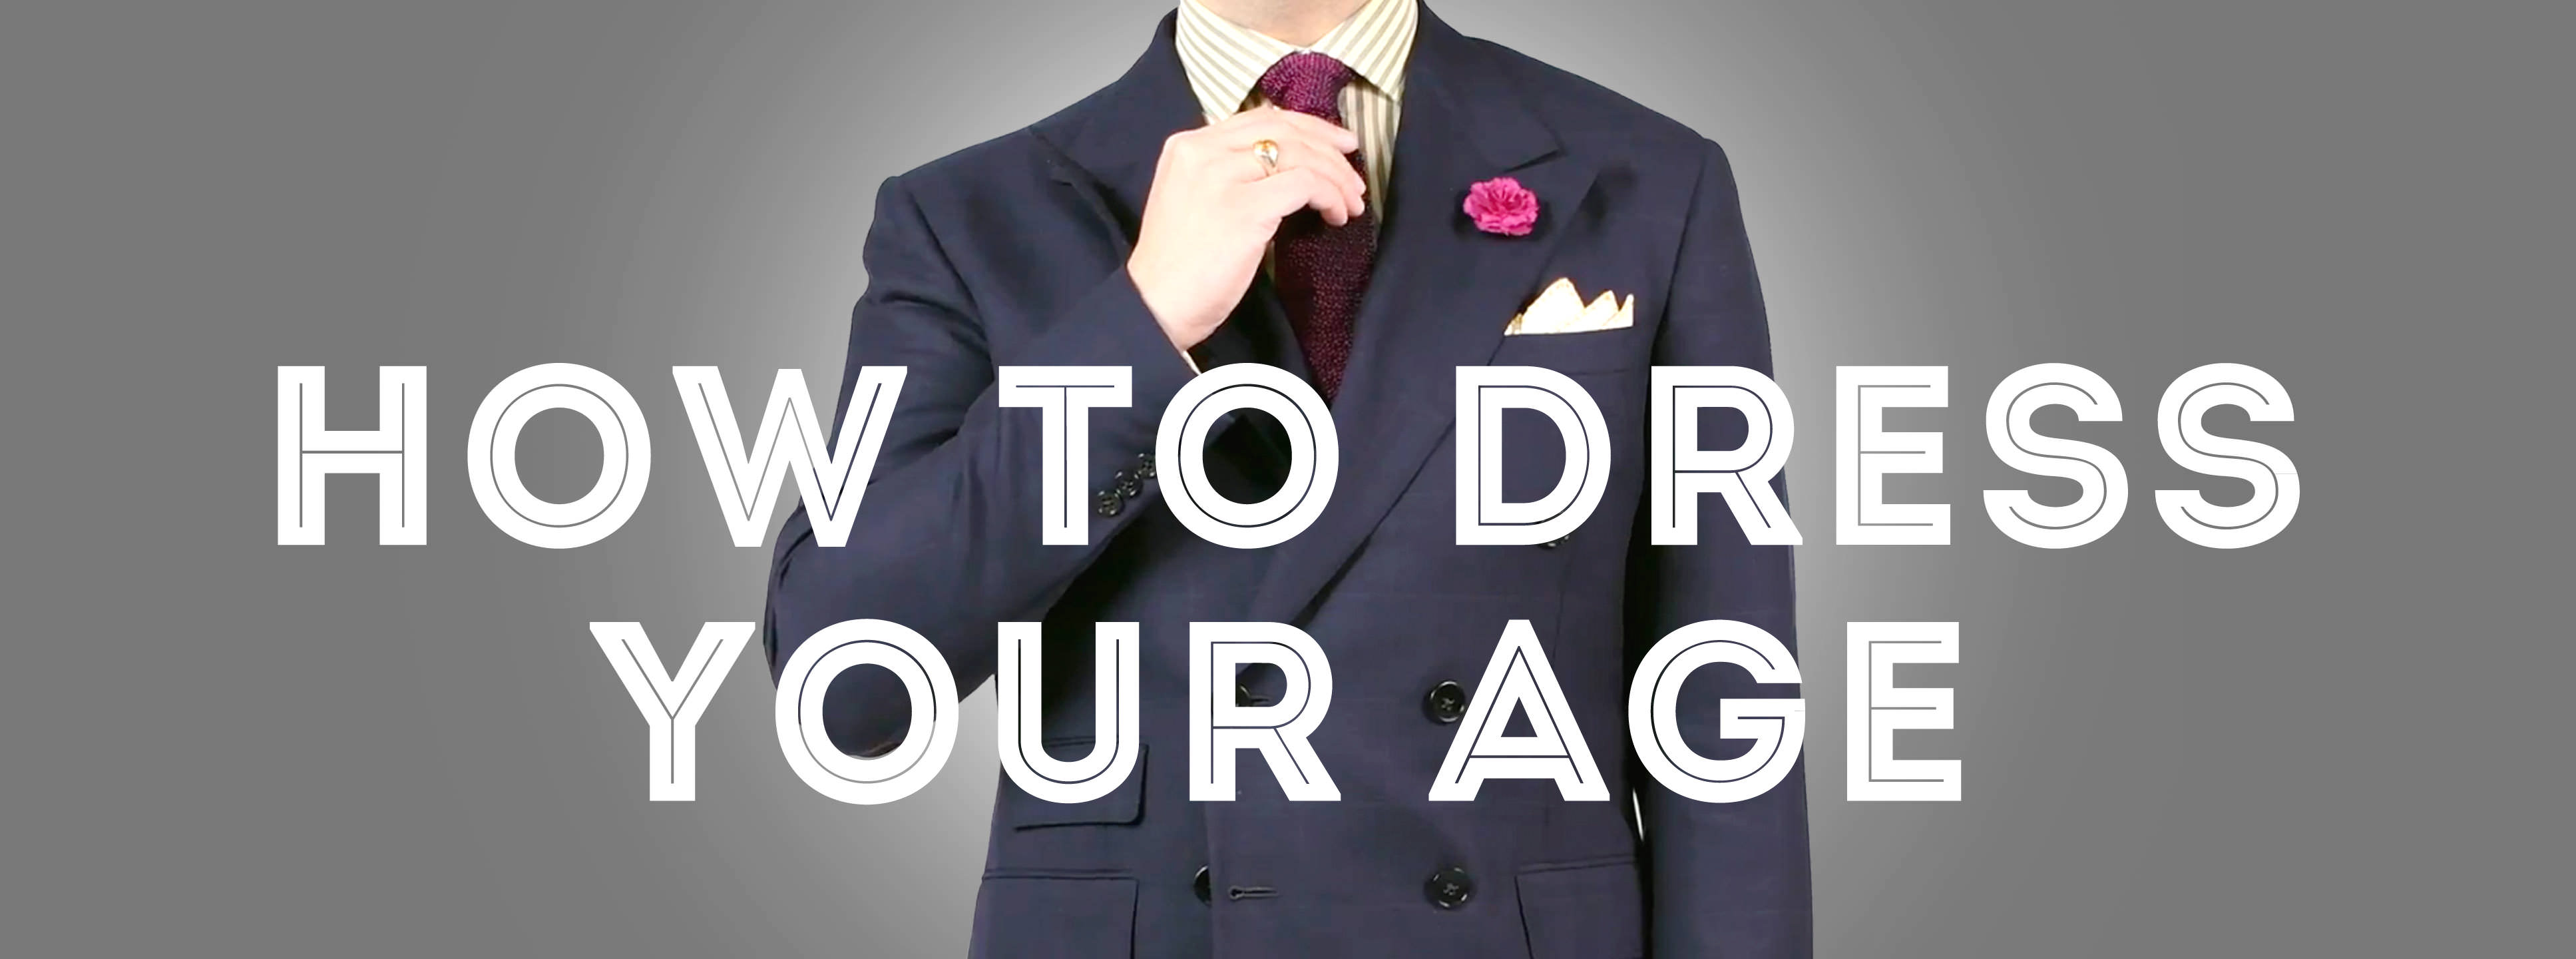 How To Dress Your Age Gentleman S Gazette